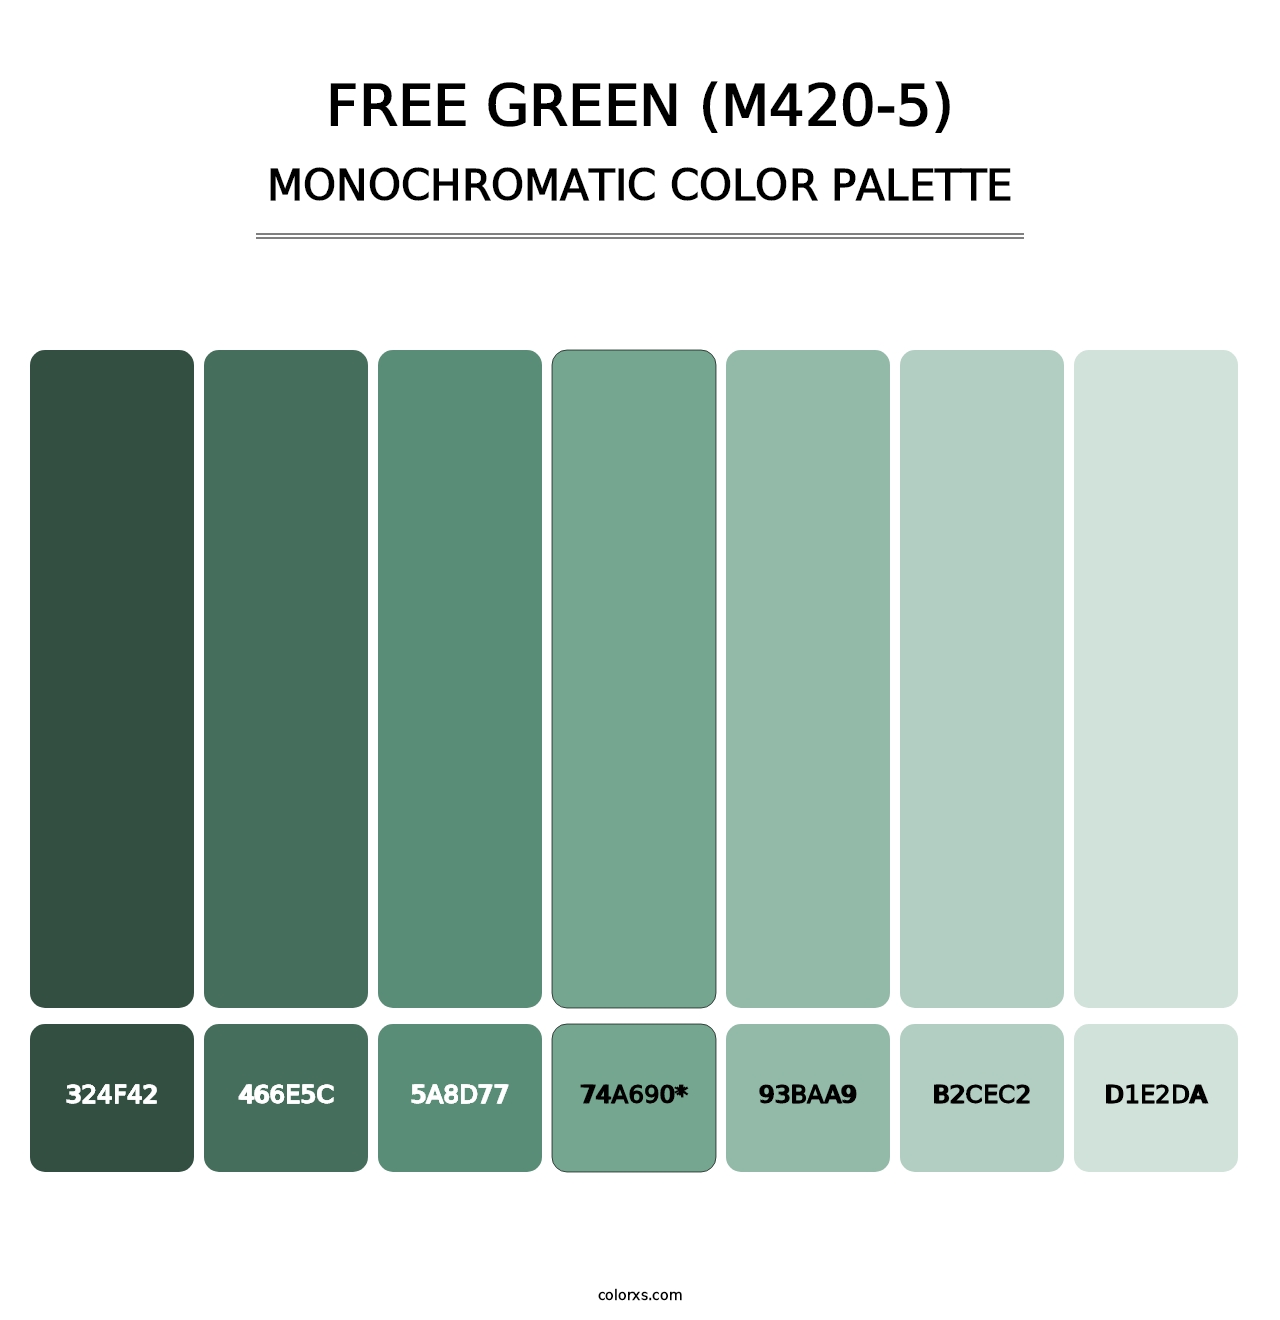 Free Green (M420-5) - Monochromatic Color Palette